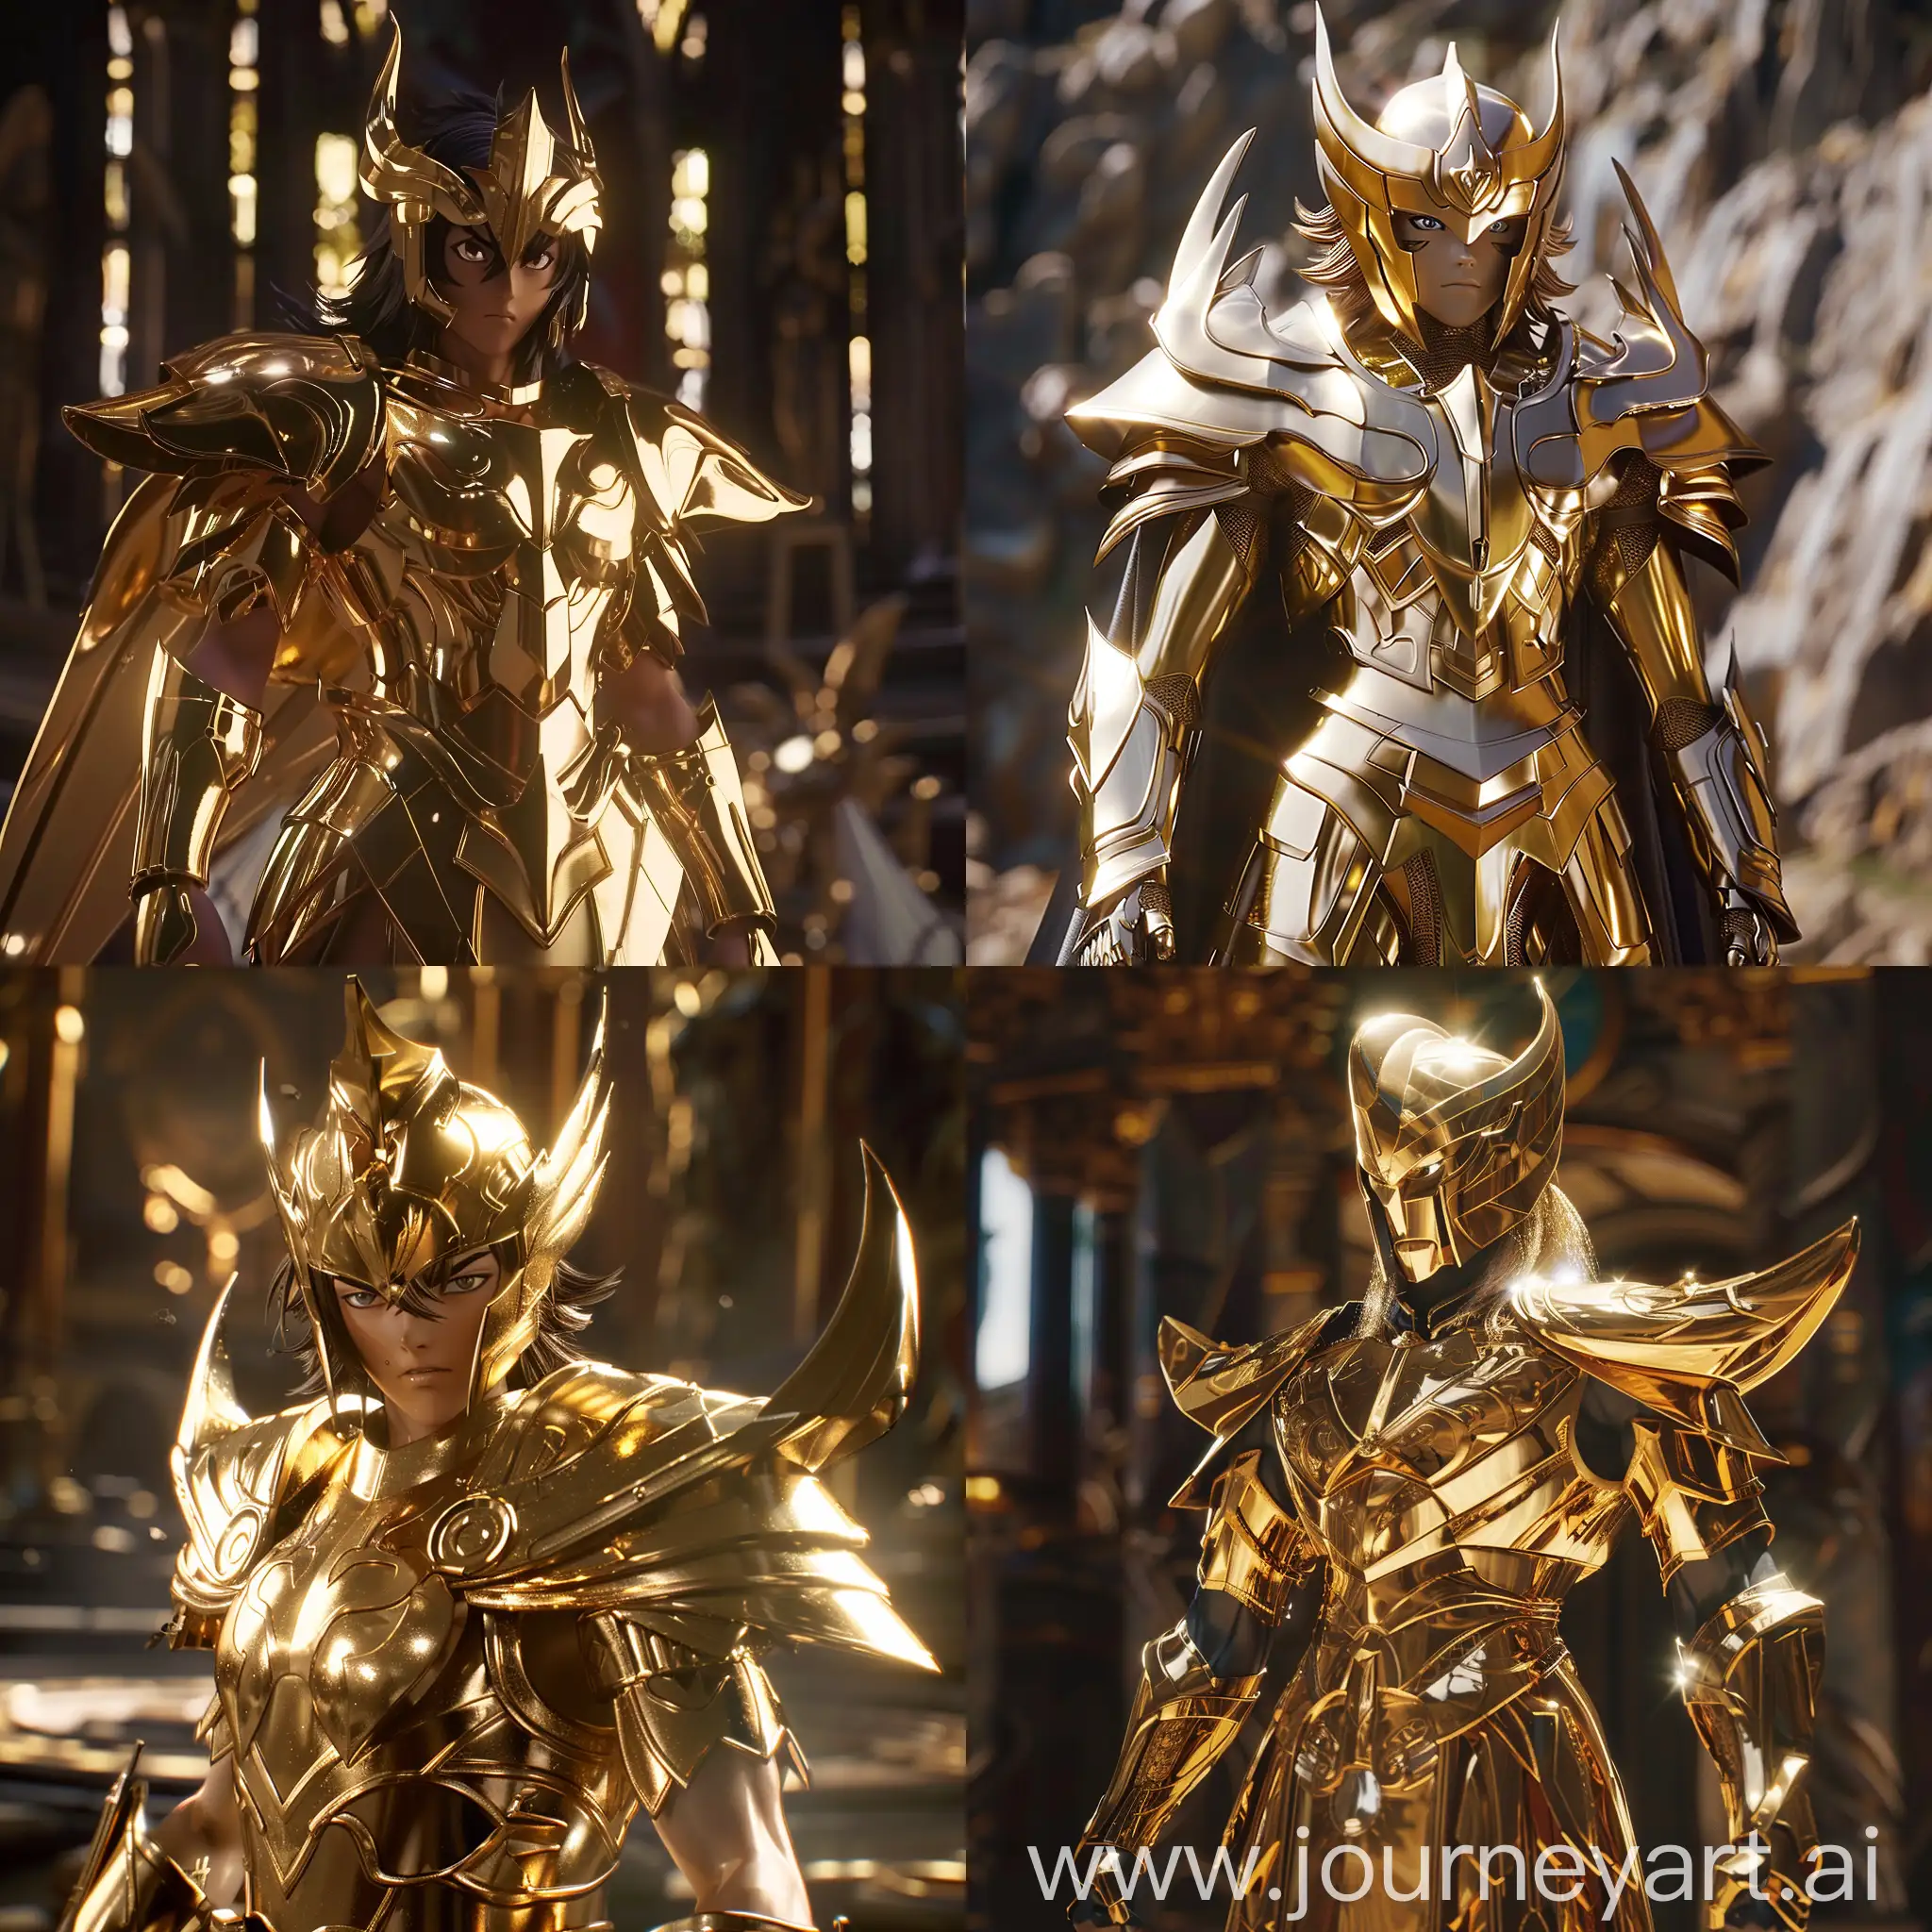 Golden-Knight-Gemini-Saga-Cinematic-Scene-in-HyperRealistic-8K-Resolution